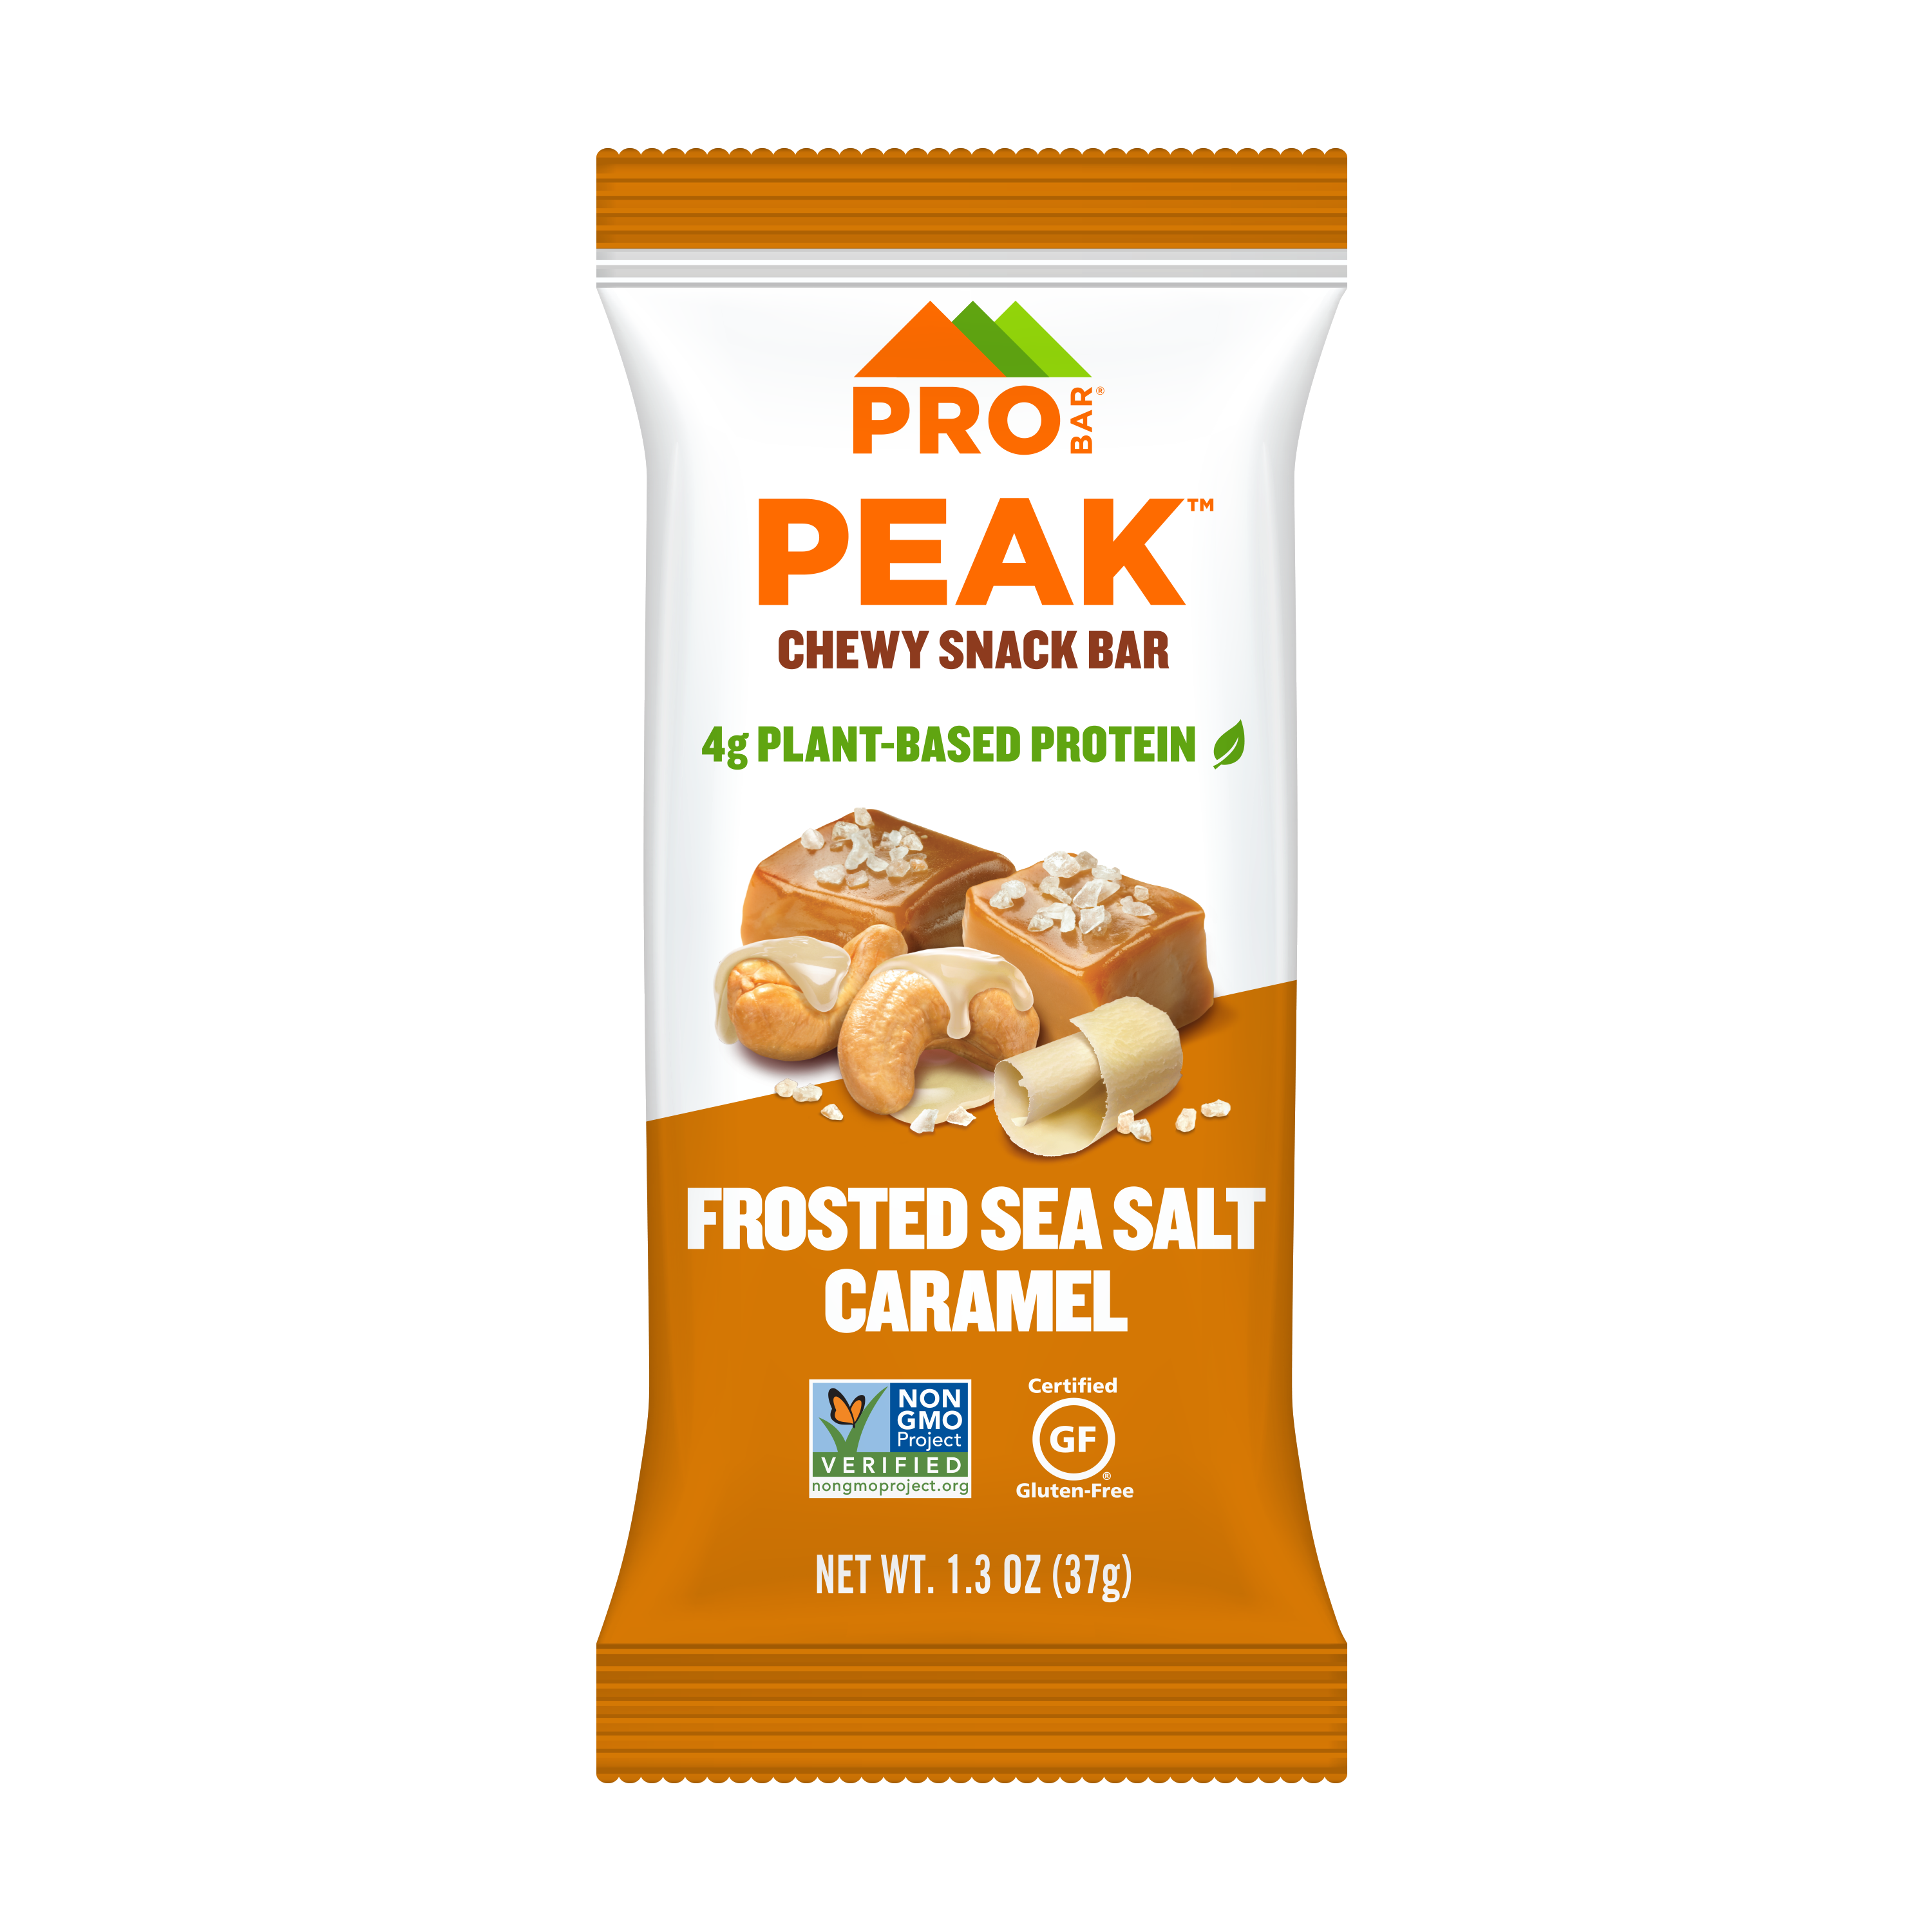 ProBar Frosted Sea Salt Caramel Peak Chewy Snack Bar 8 innerpacks per case 1.3 oz